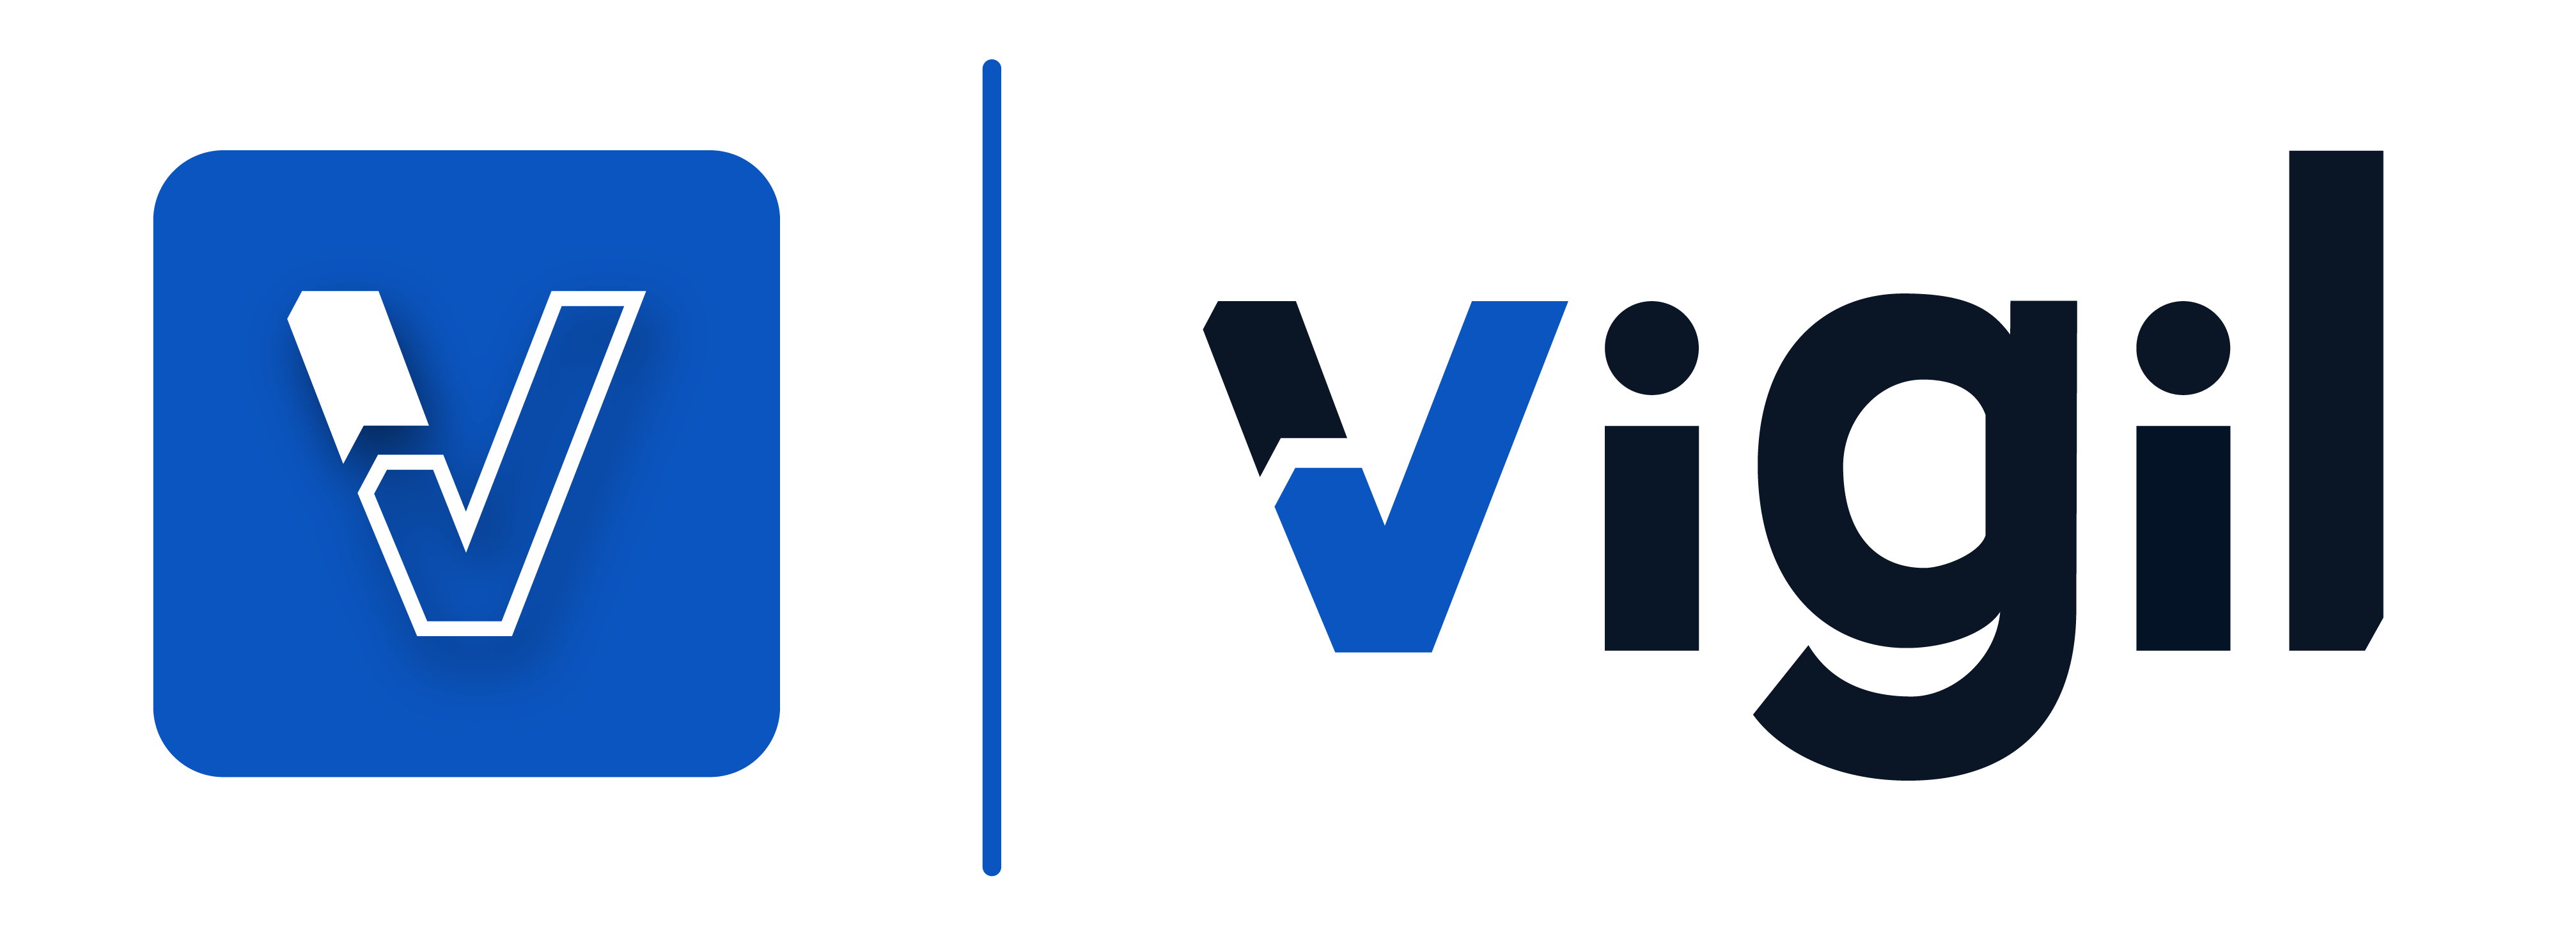 Vigil - Essential App for the Healthcare Professional